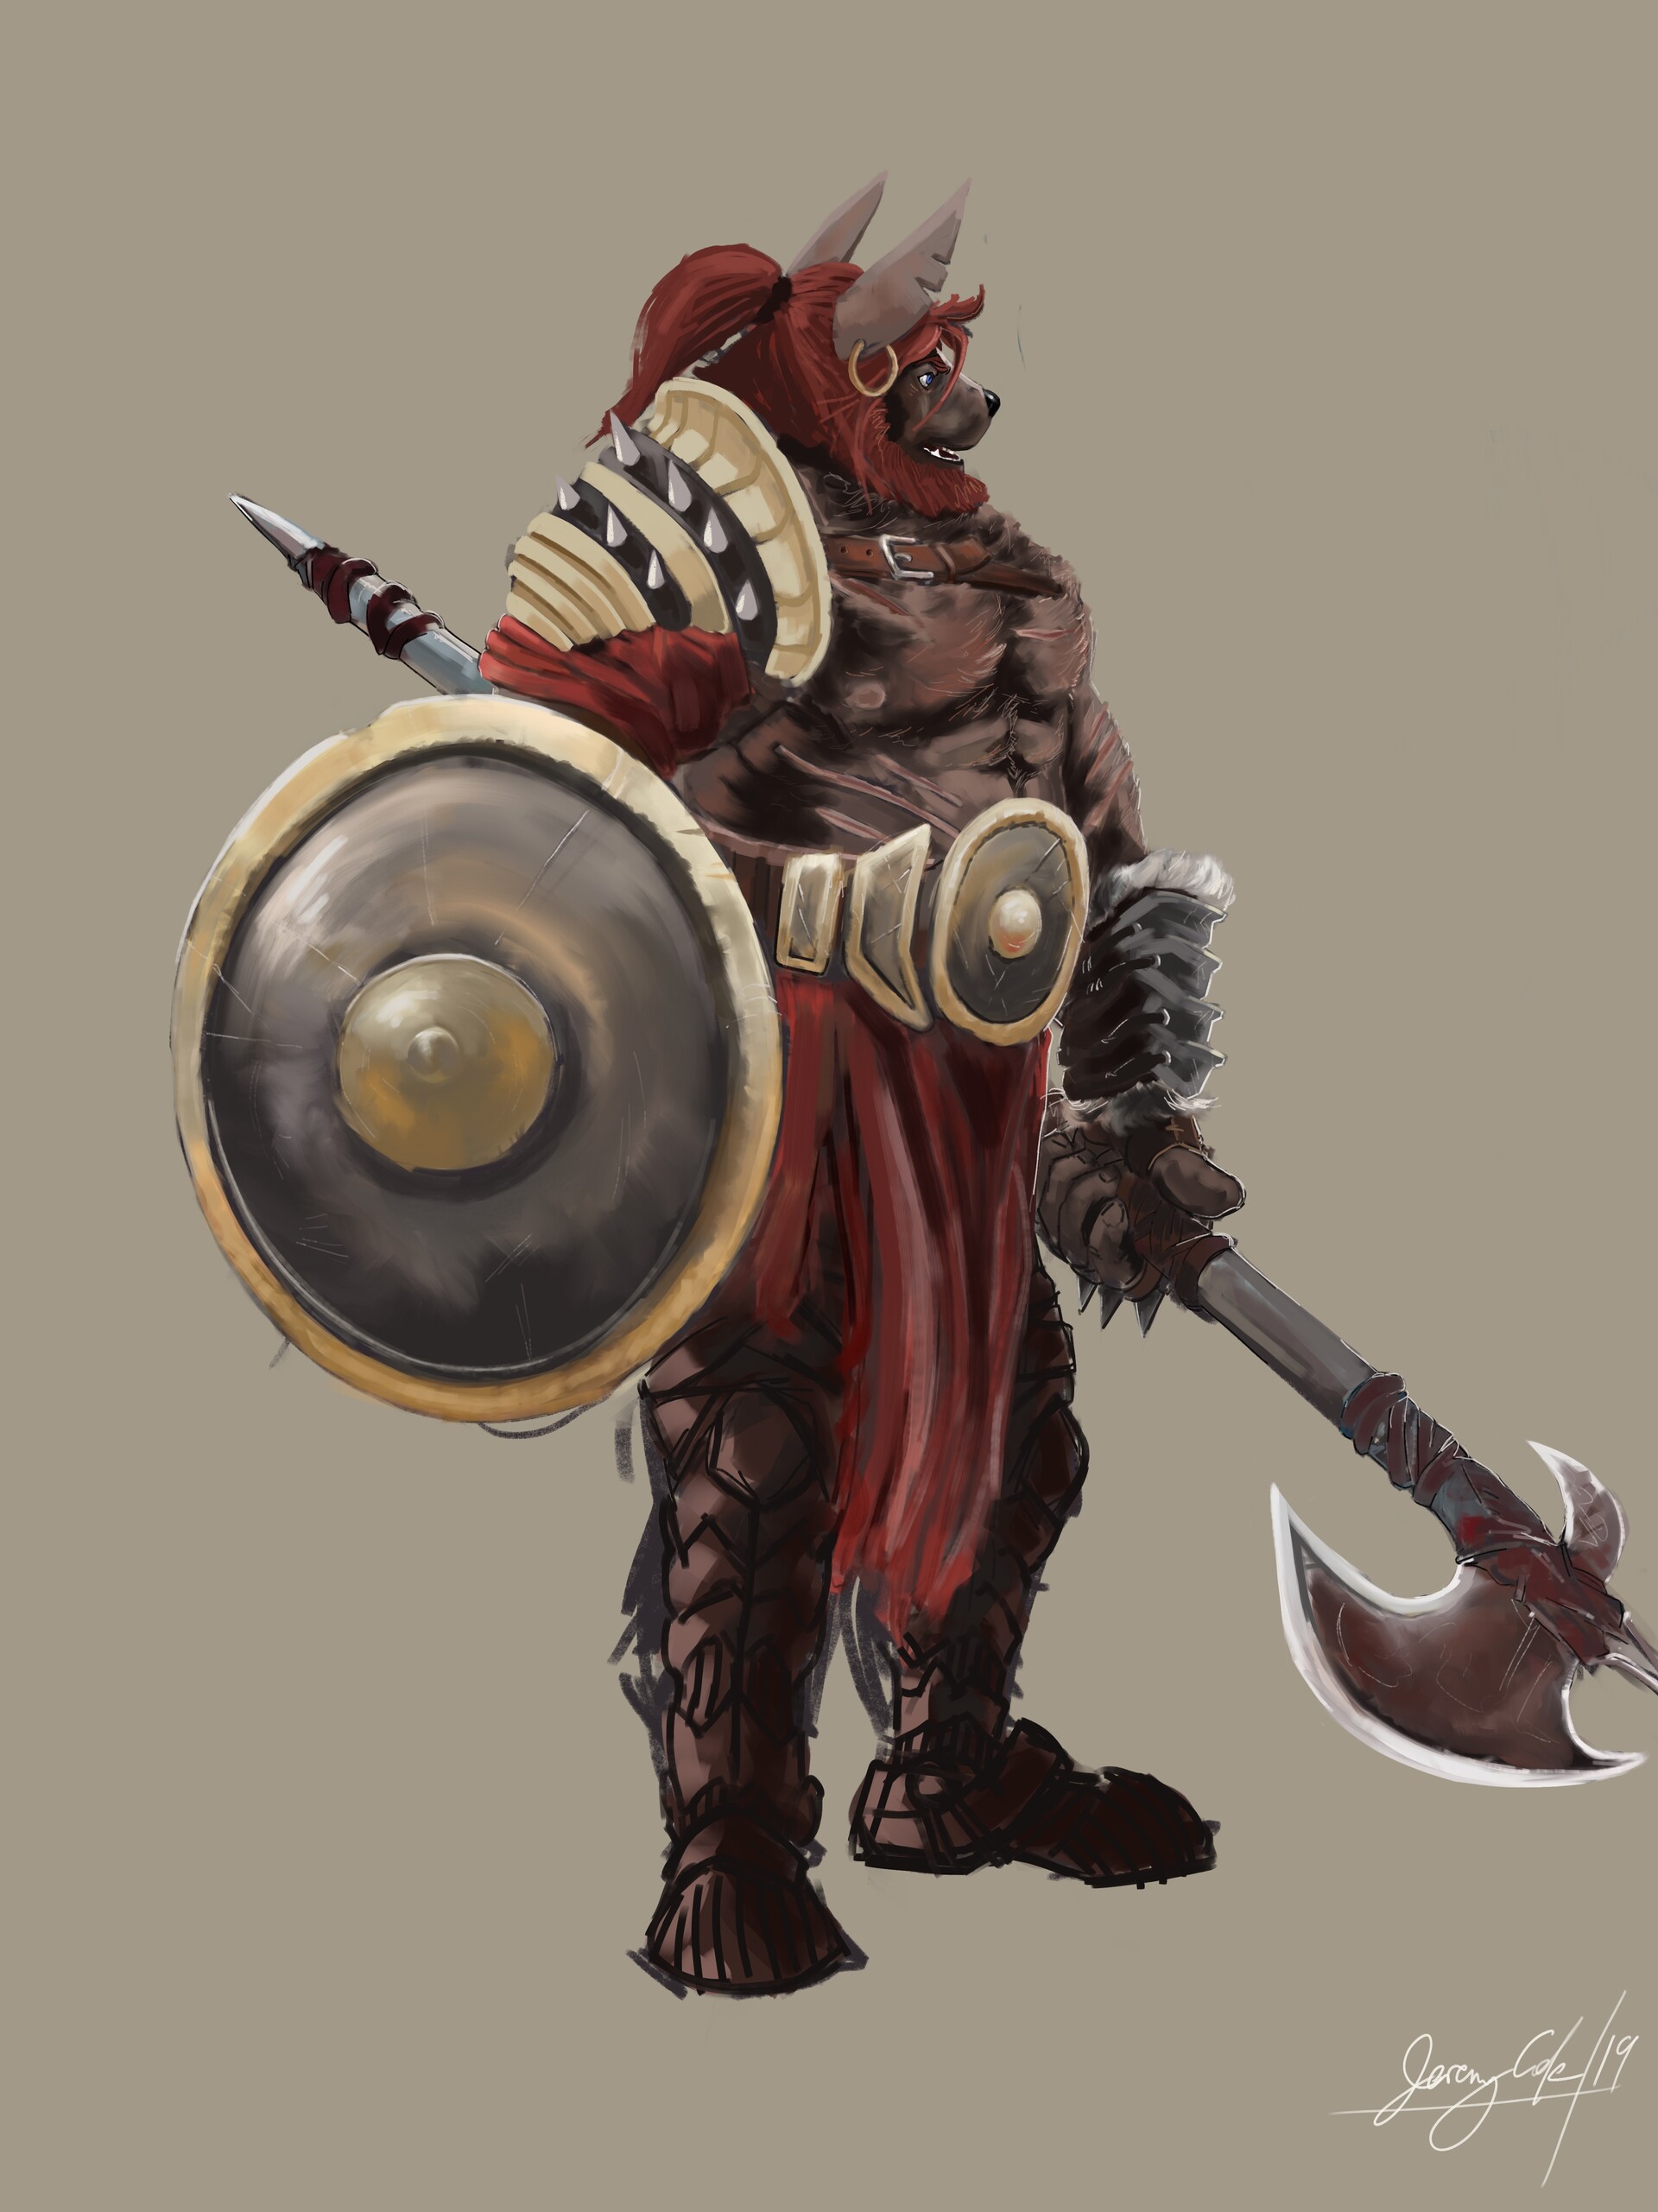 Gladiator Armor Art